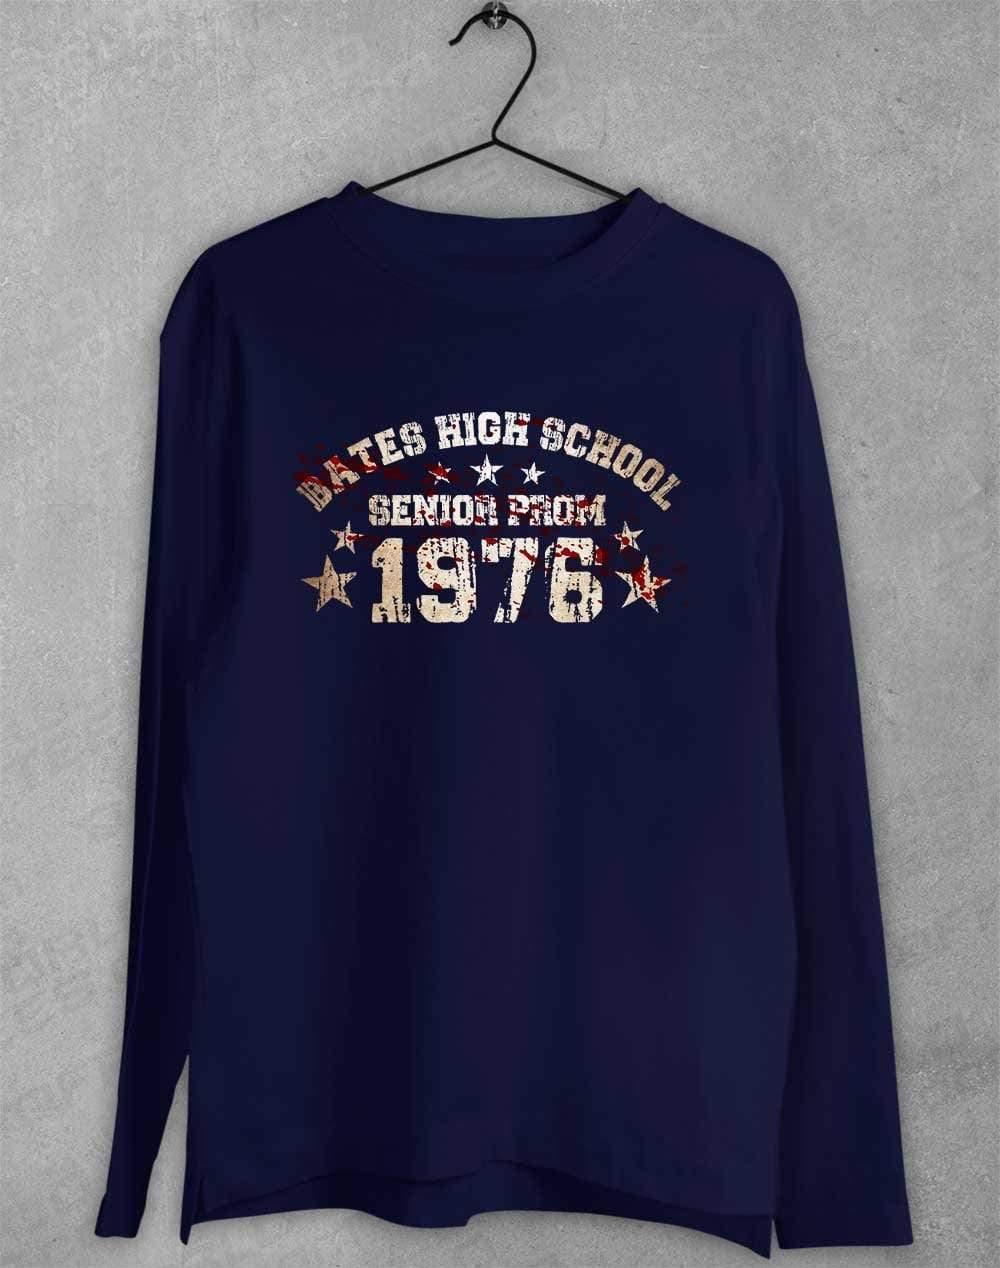 Bates High School Prom 1976 Long Sleeve T-Shirt S / Navy  - Off World Tees